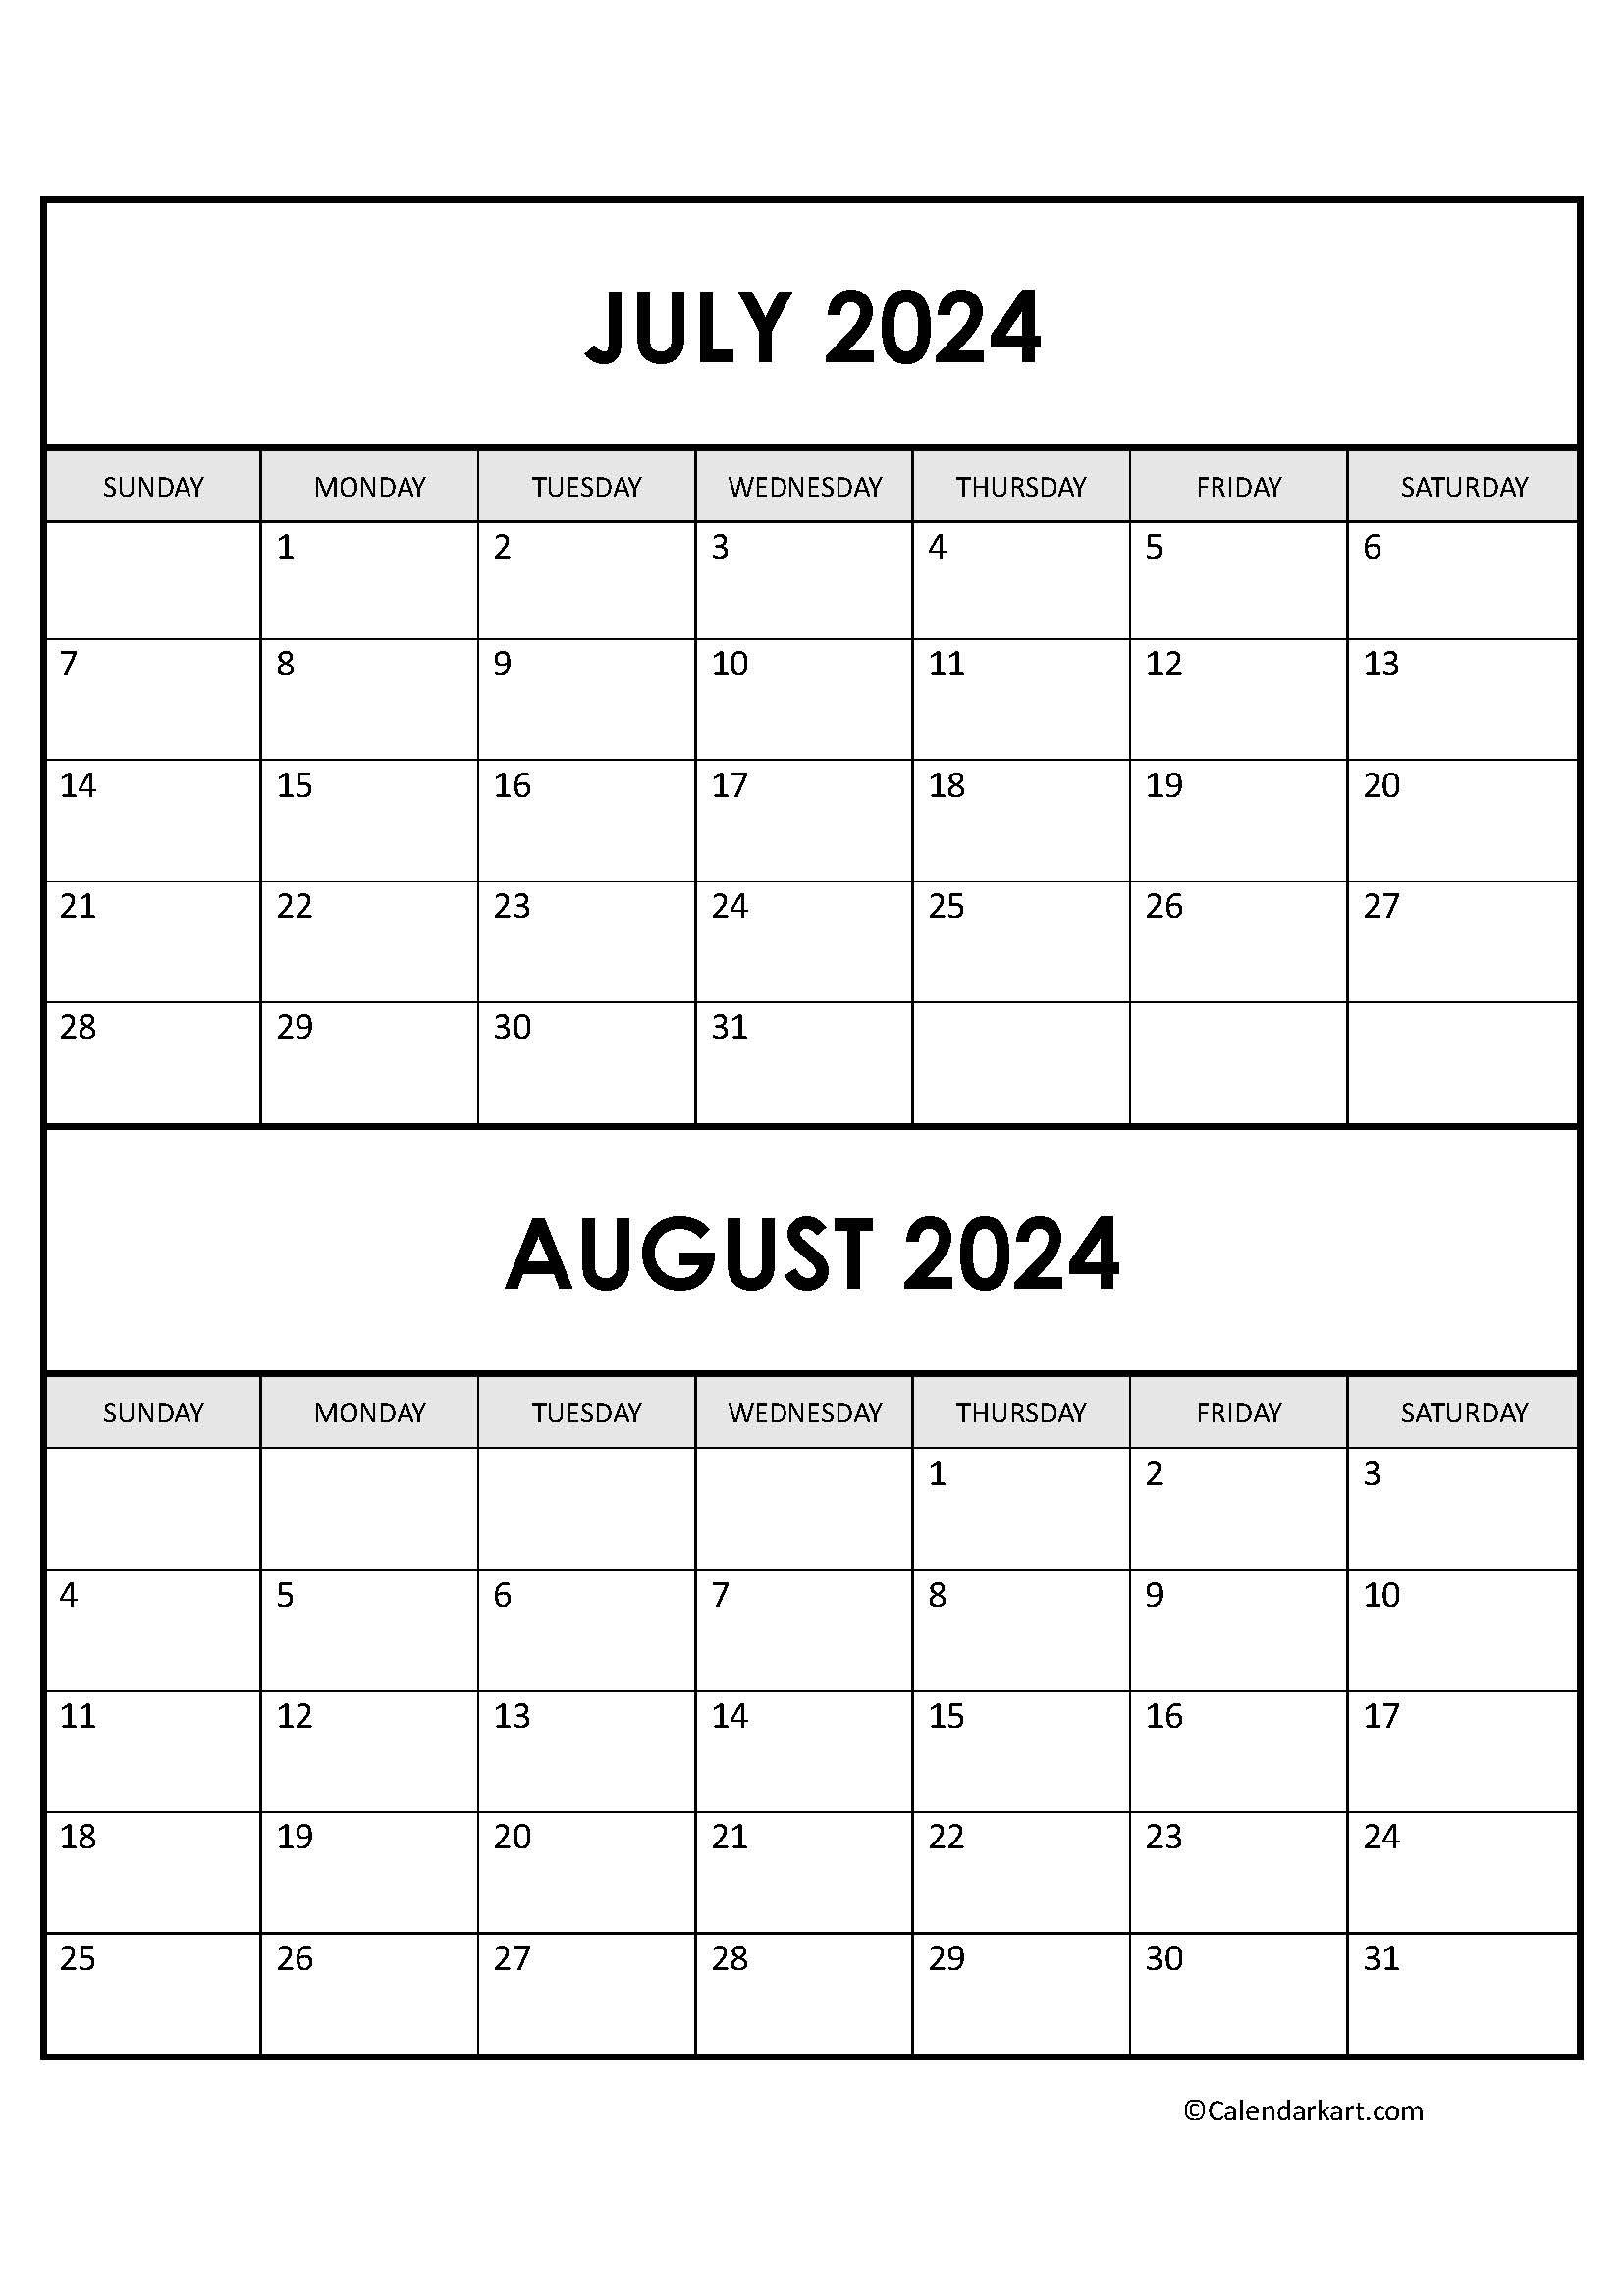 Printable July August 2024 Calendar | Calendarkart with Blank July August Calendar 2024